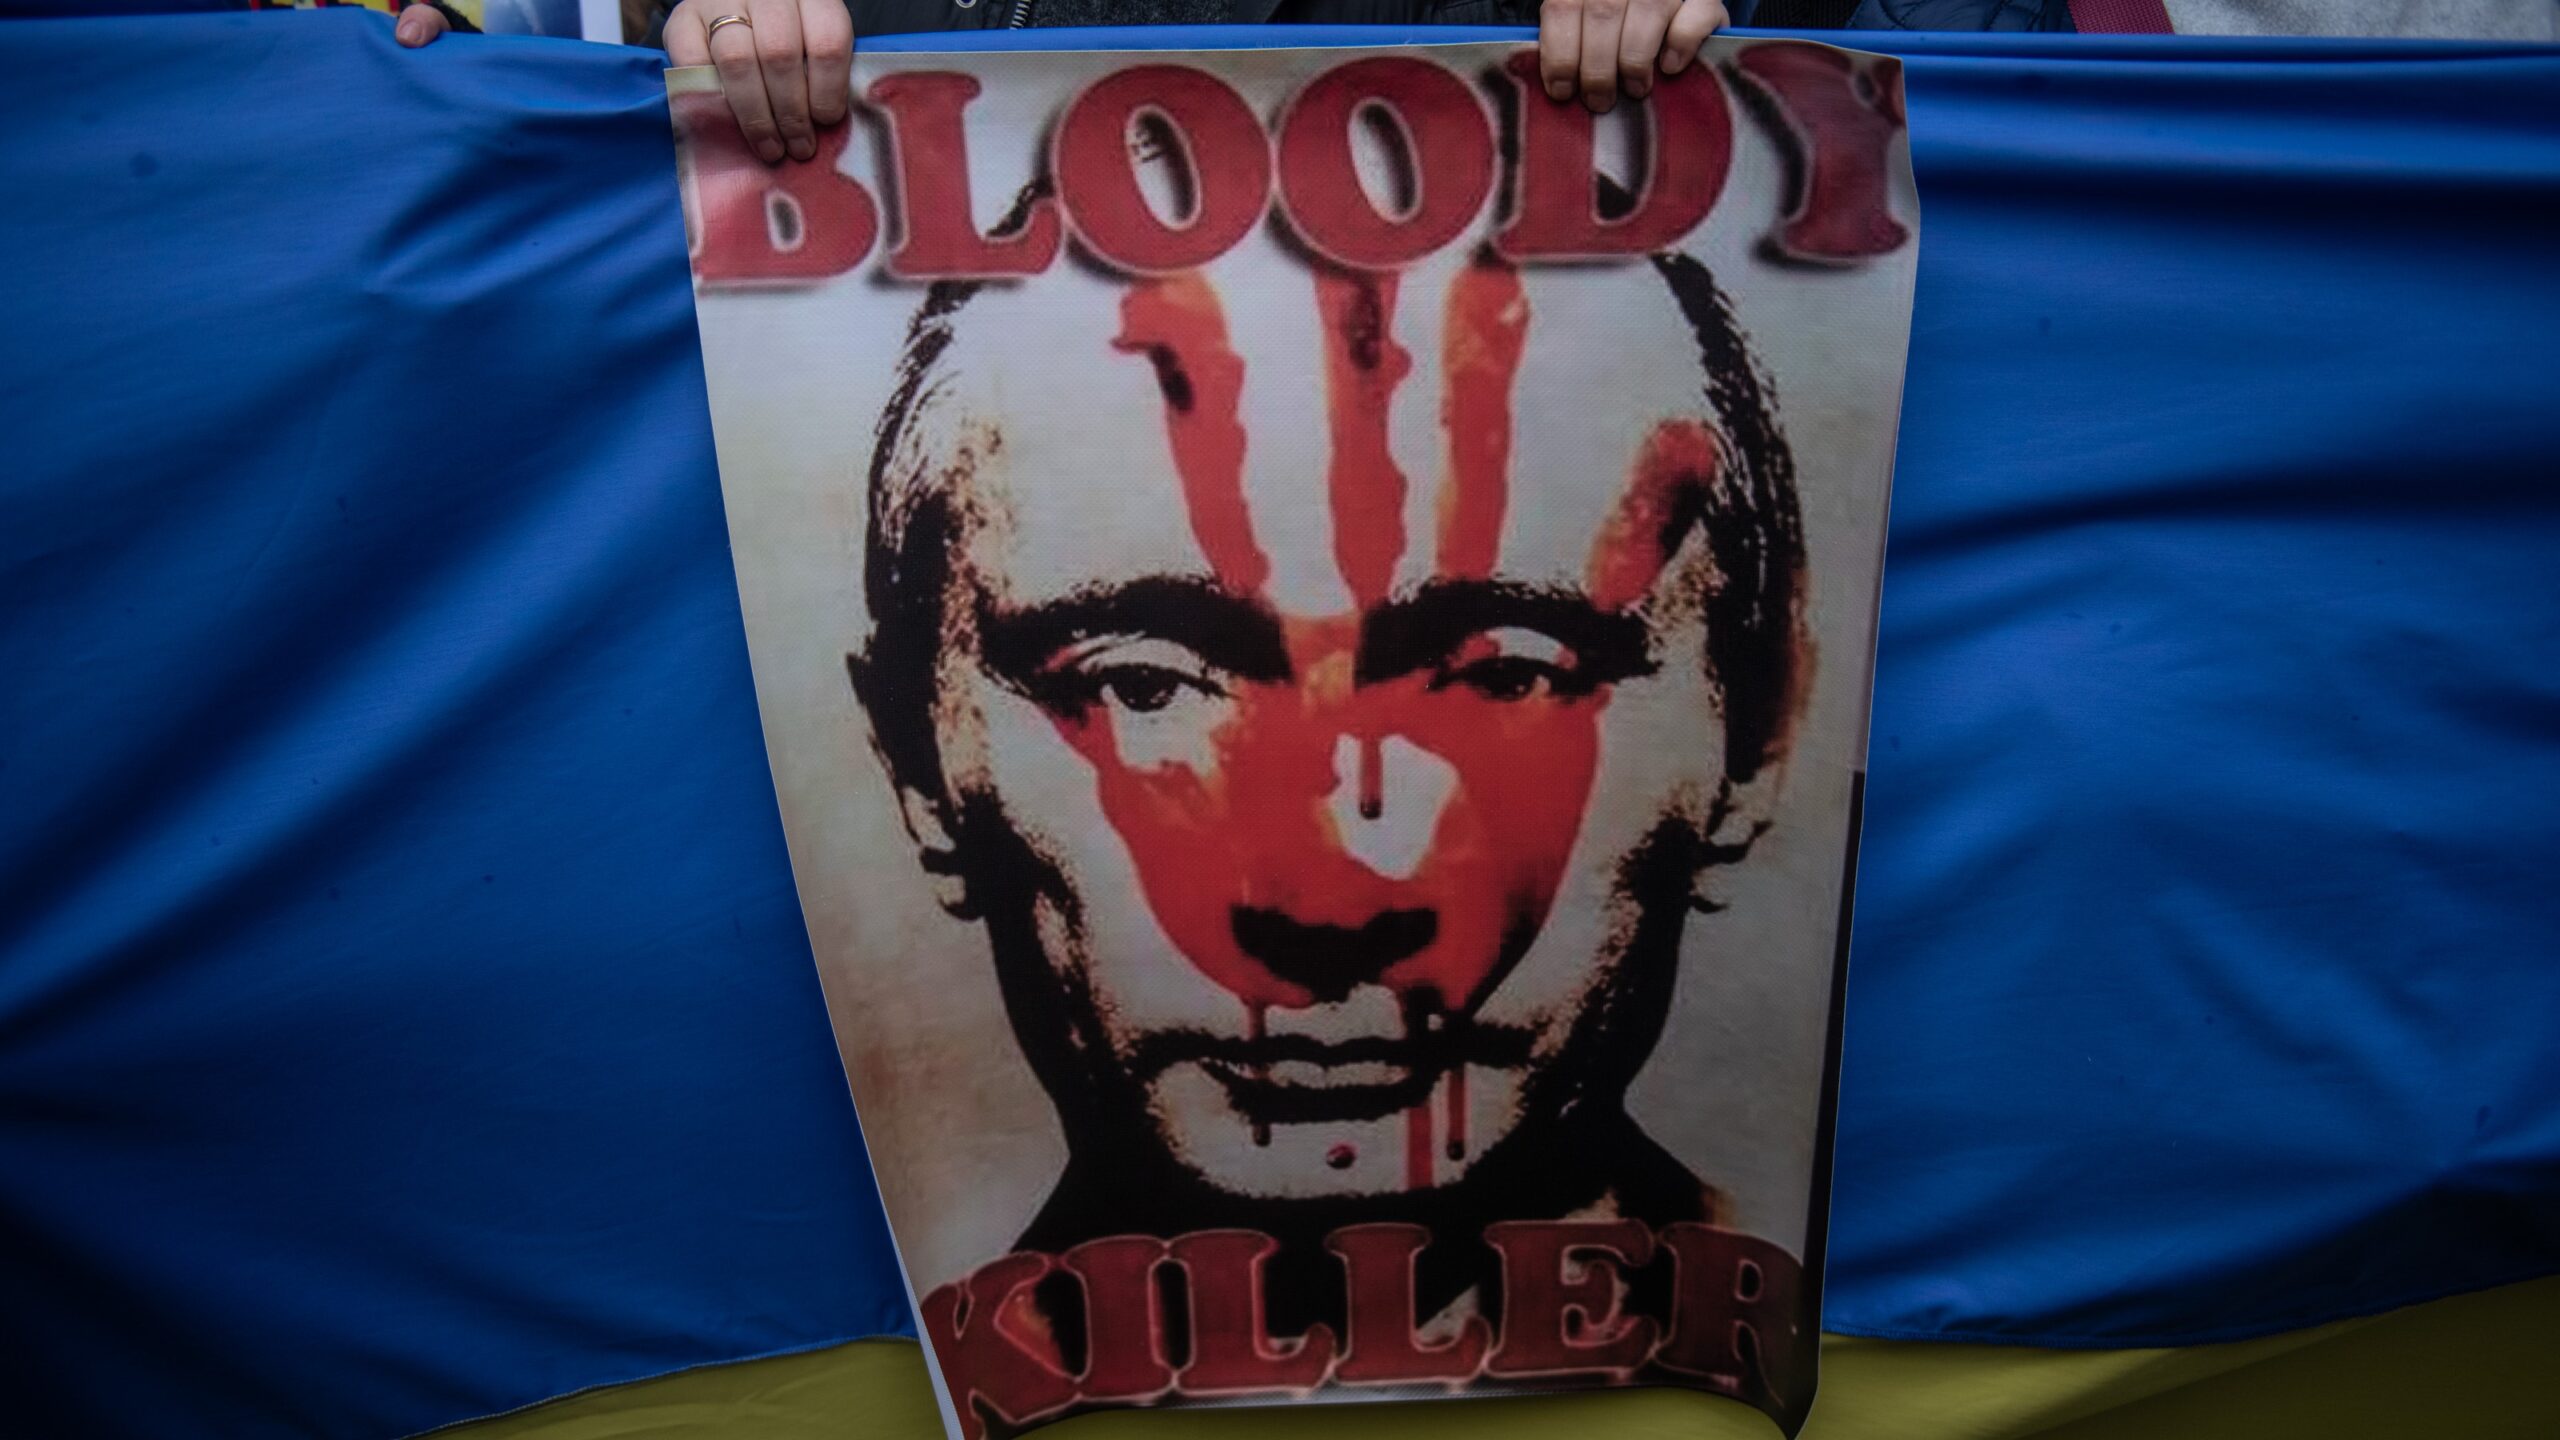 Putin poster protest ukraine